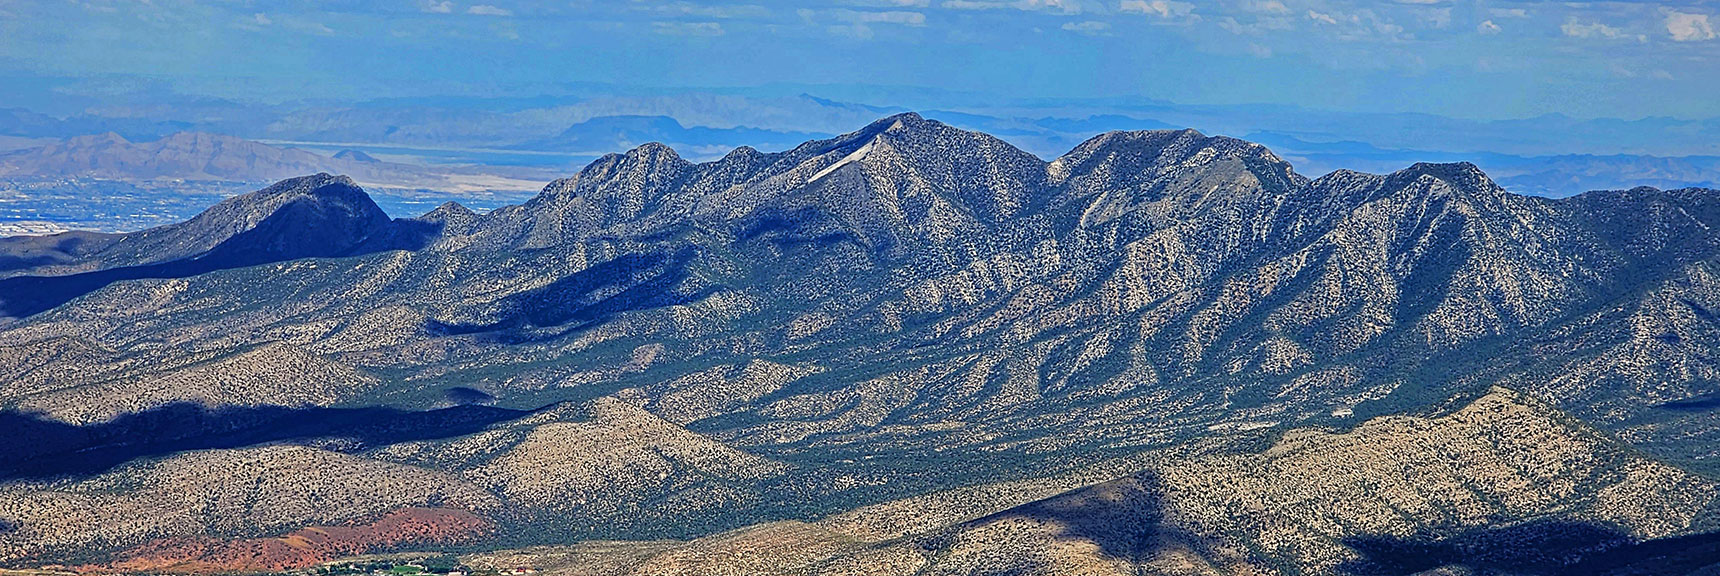 La Madre Mountains: La Madre Mt (White Limestone Devil's Slide), El Padre, Burnt Peak to Right | Harris Mountain Triangle | Mt Charleston Wilderness, Nevada